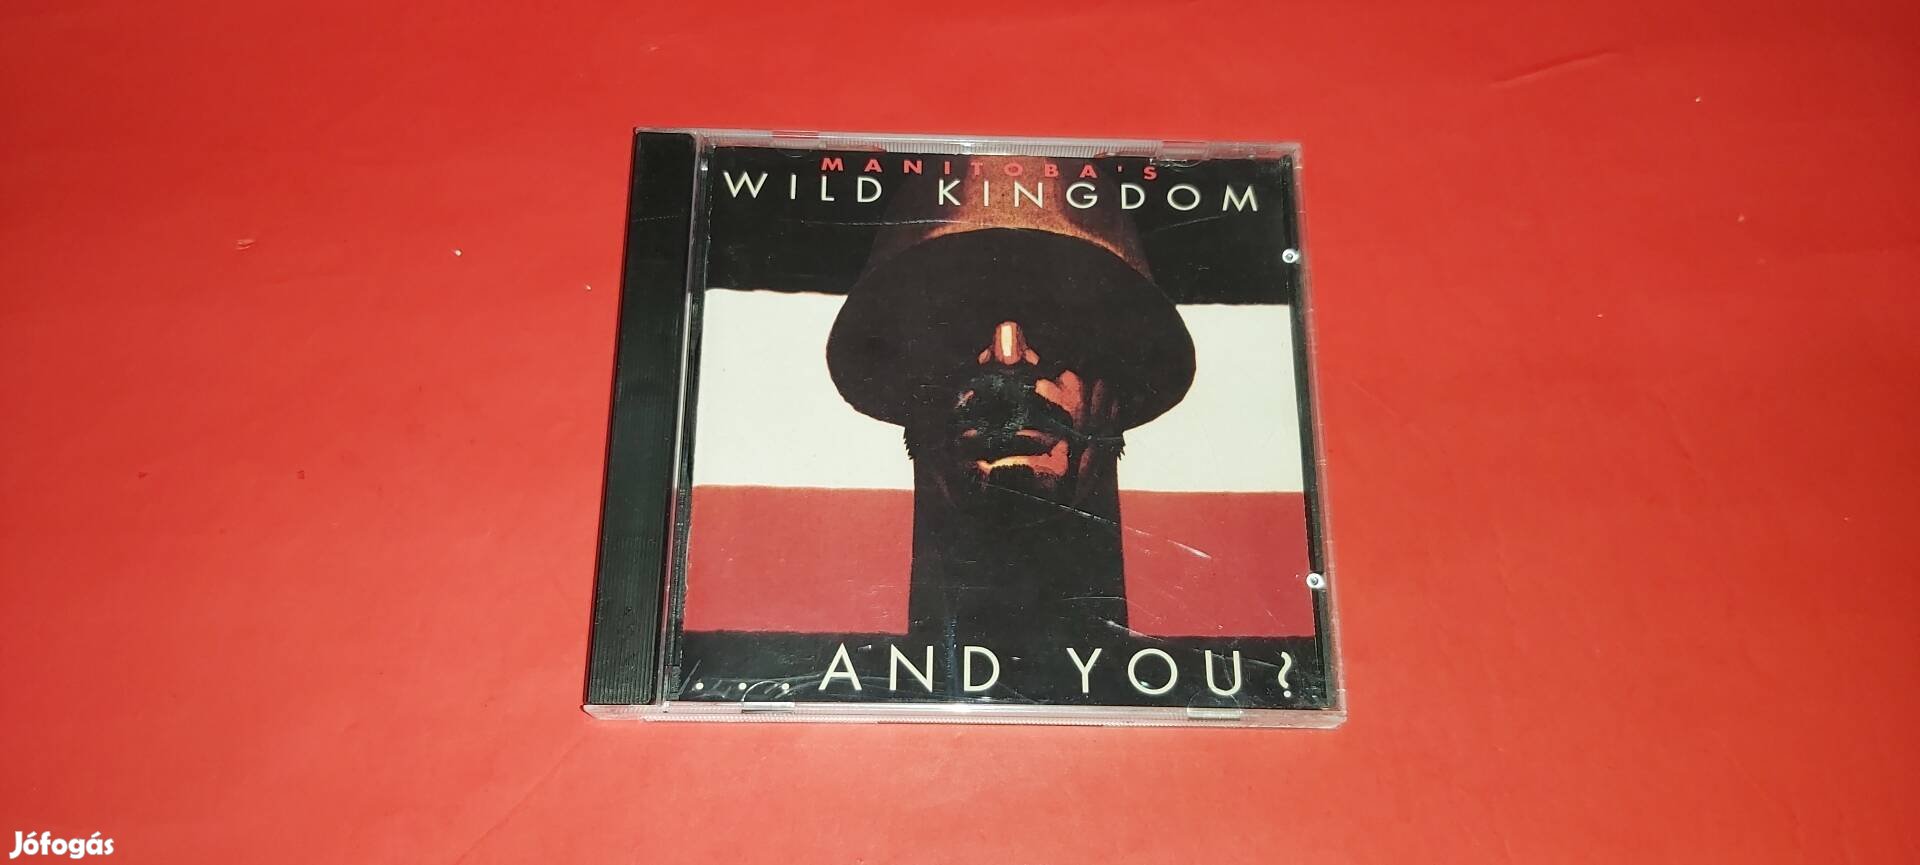 Manitoba's Wild Kingdom And you ? Cd 1990 Har rock / punk